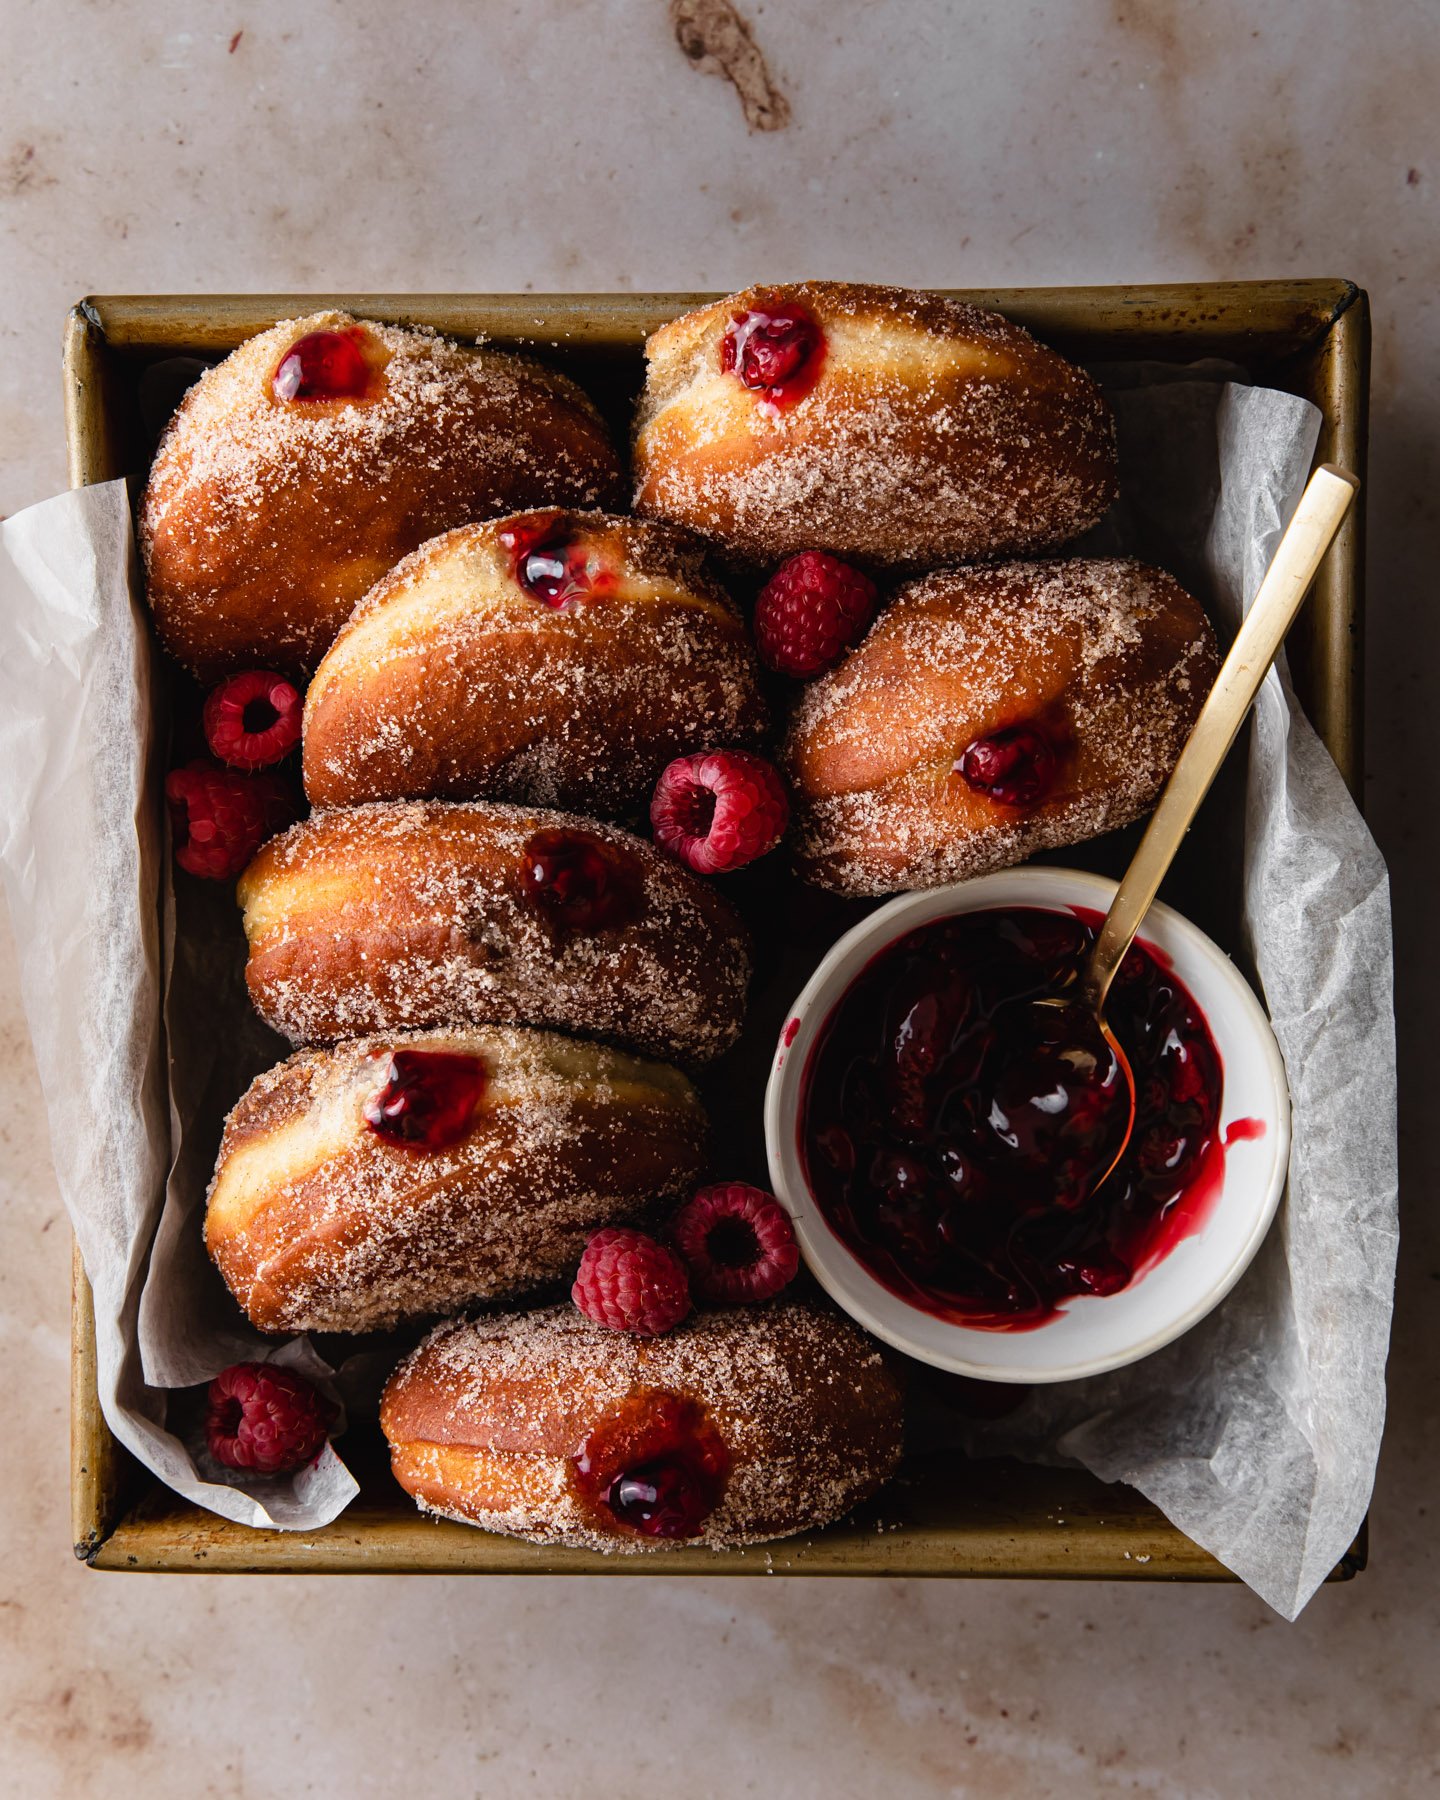 Raspberry filled brioche donuts